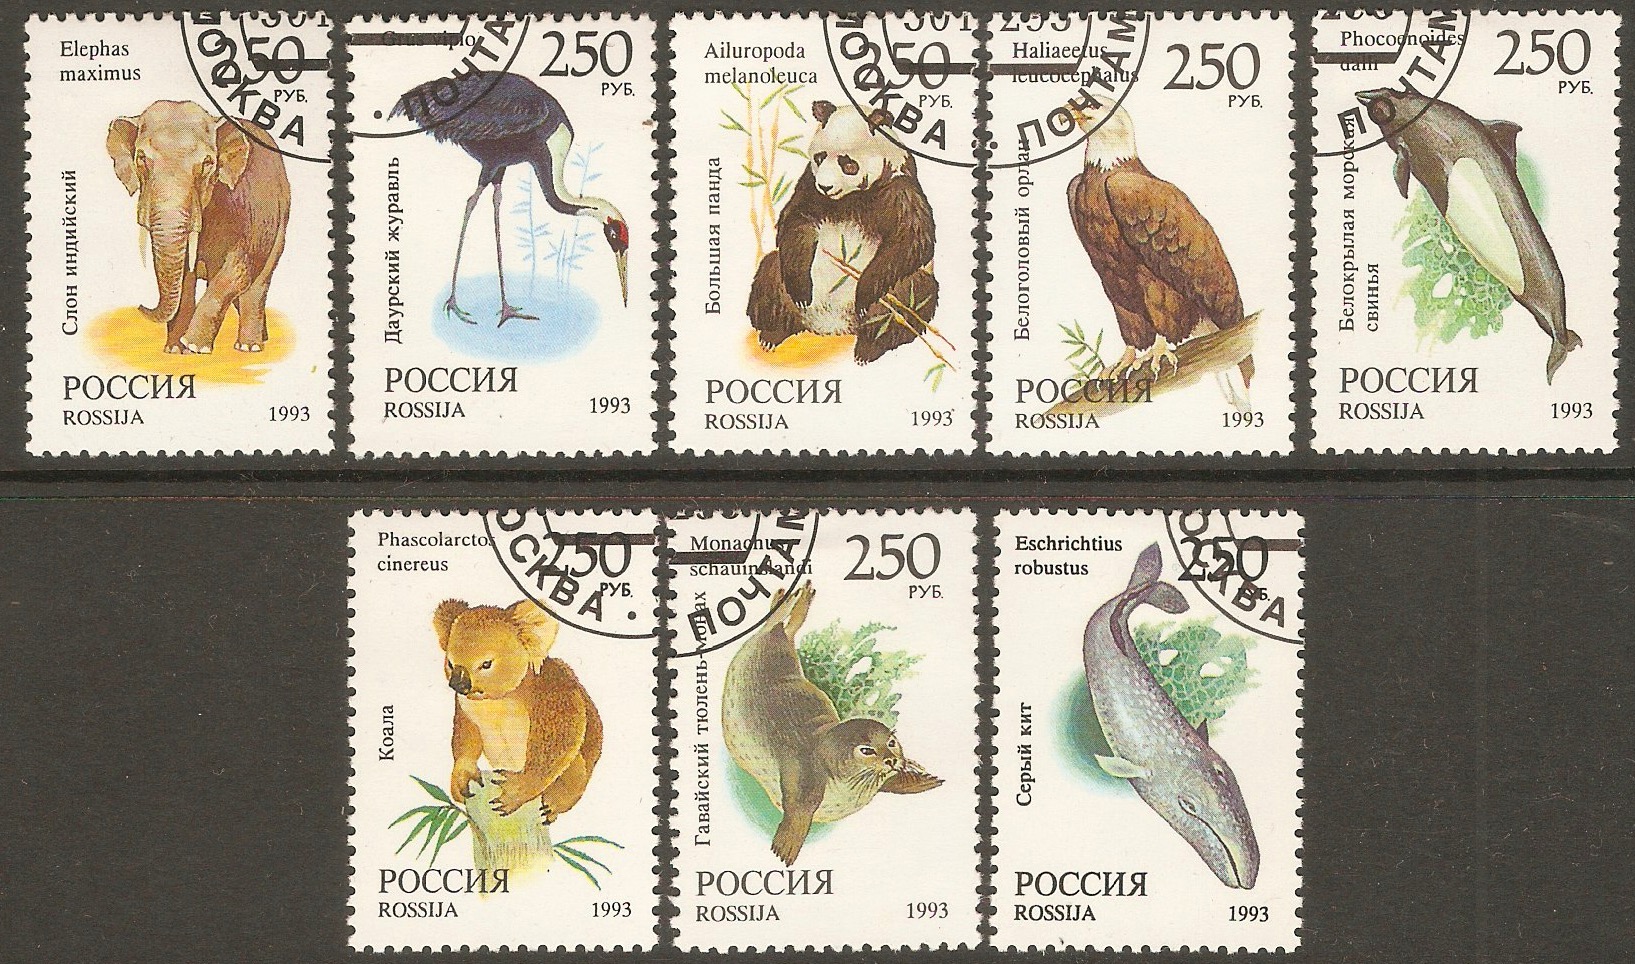 Russia 1993 Animals set. SG6449-SG6456.